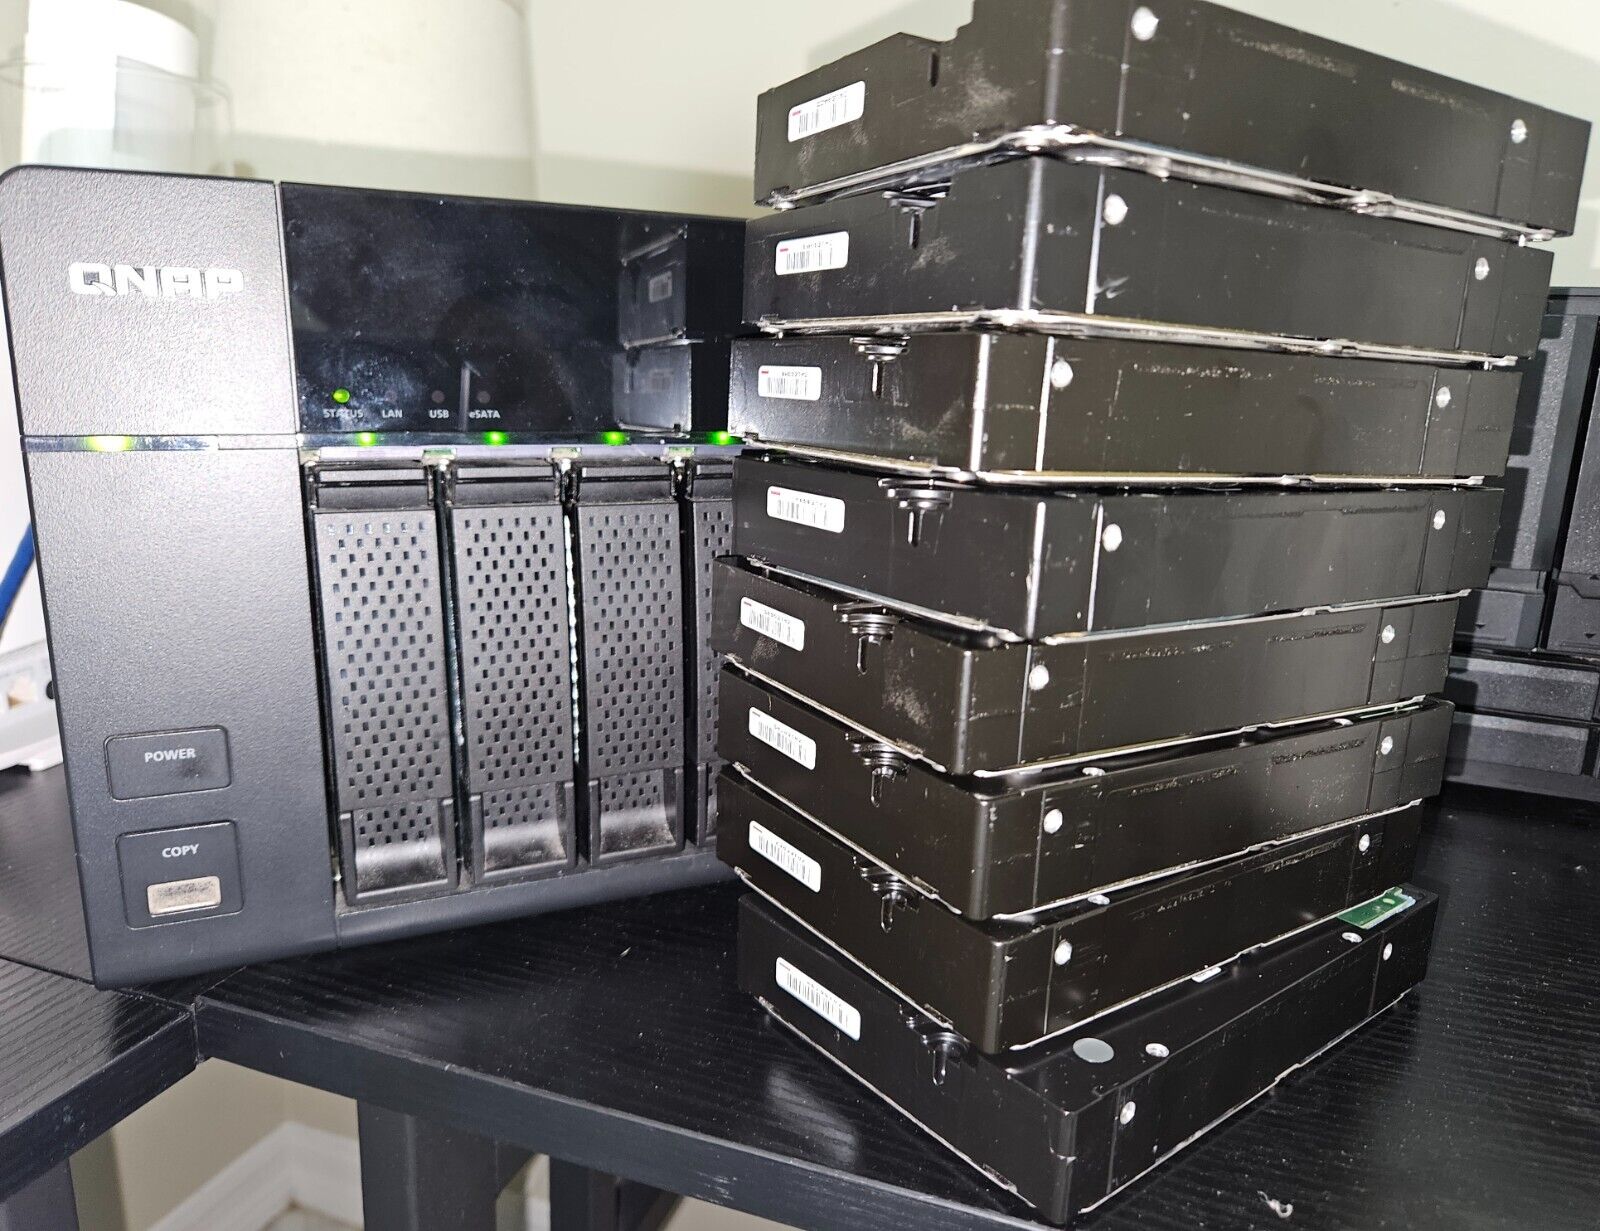 QNAP TS-859 NAS Server with 8x6TB=48TB total